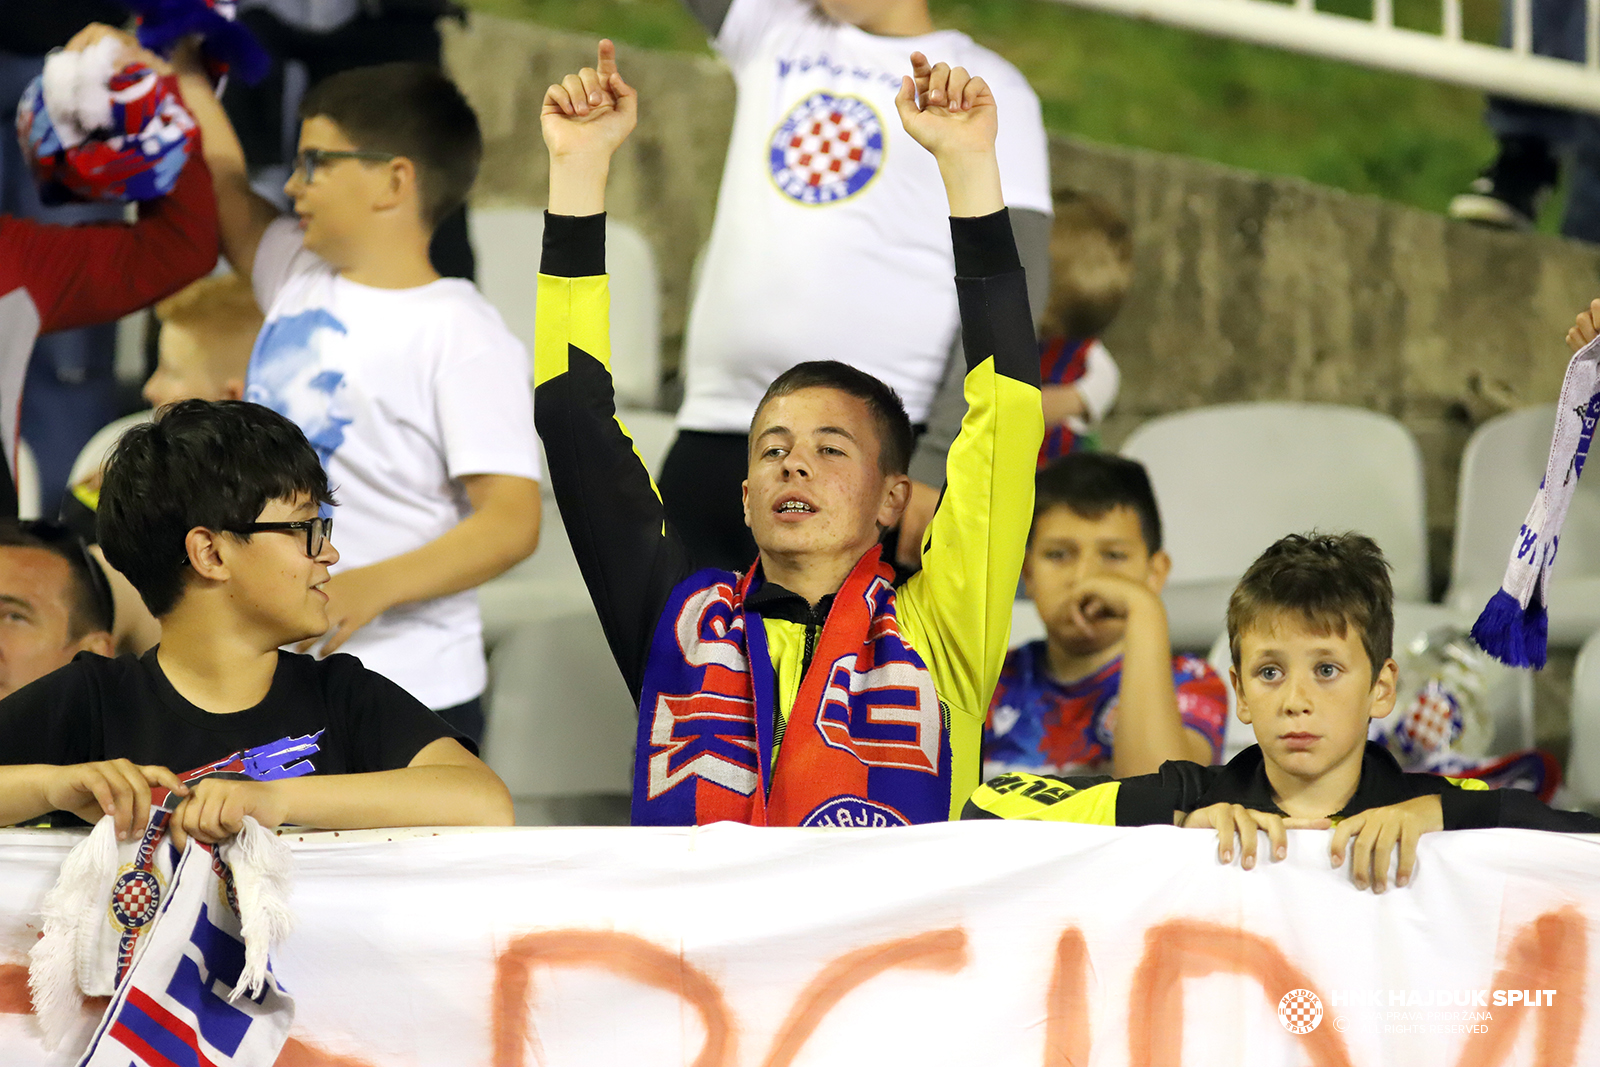 Split: Hajduk - Varaždin 2:0 • HNK Hajduk Split